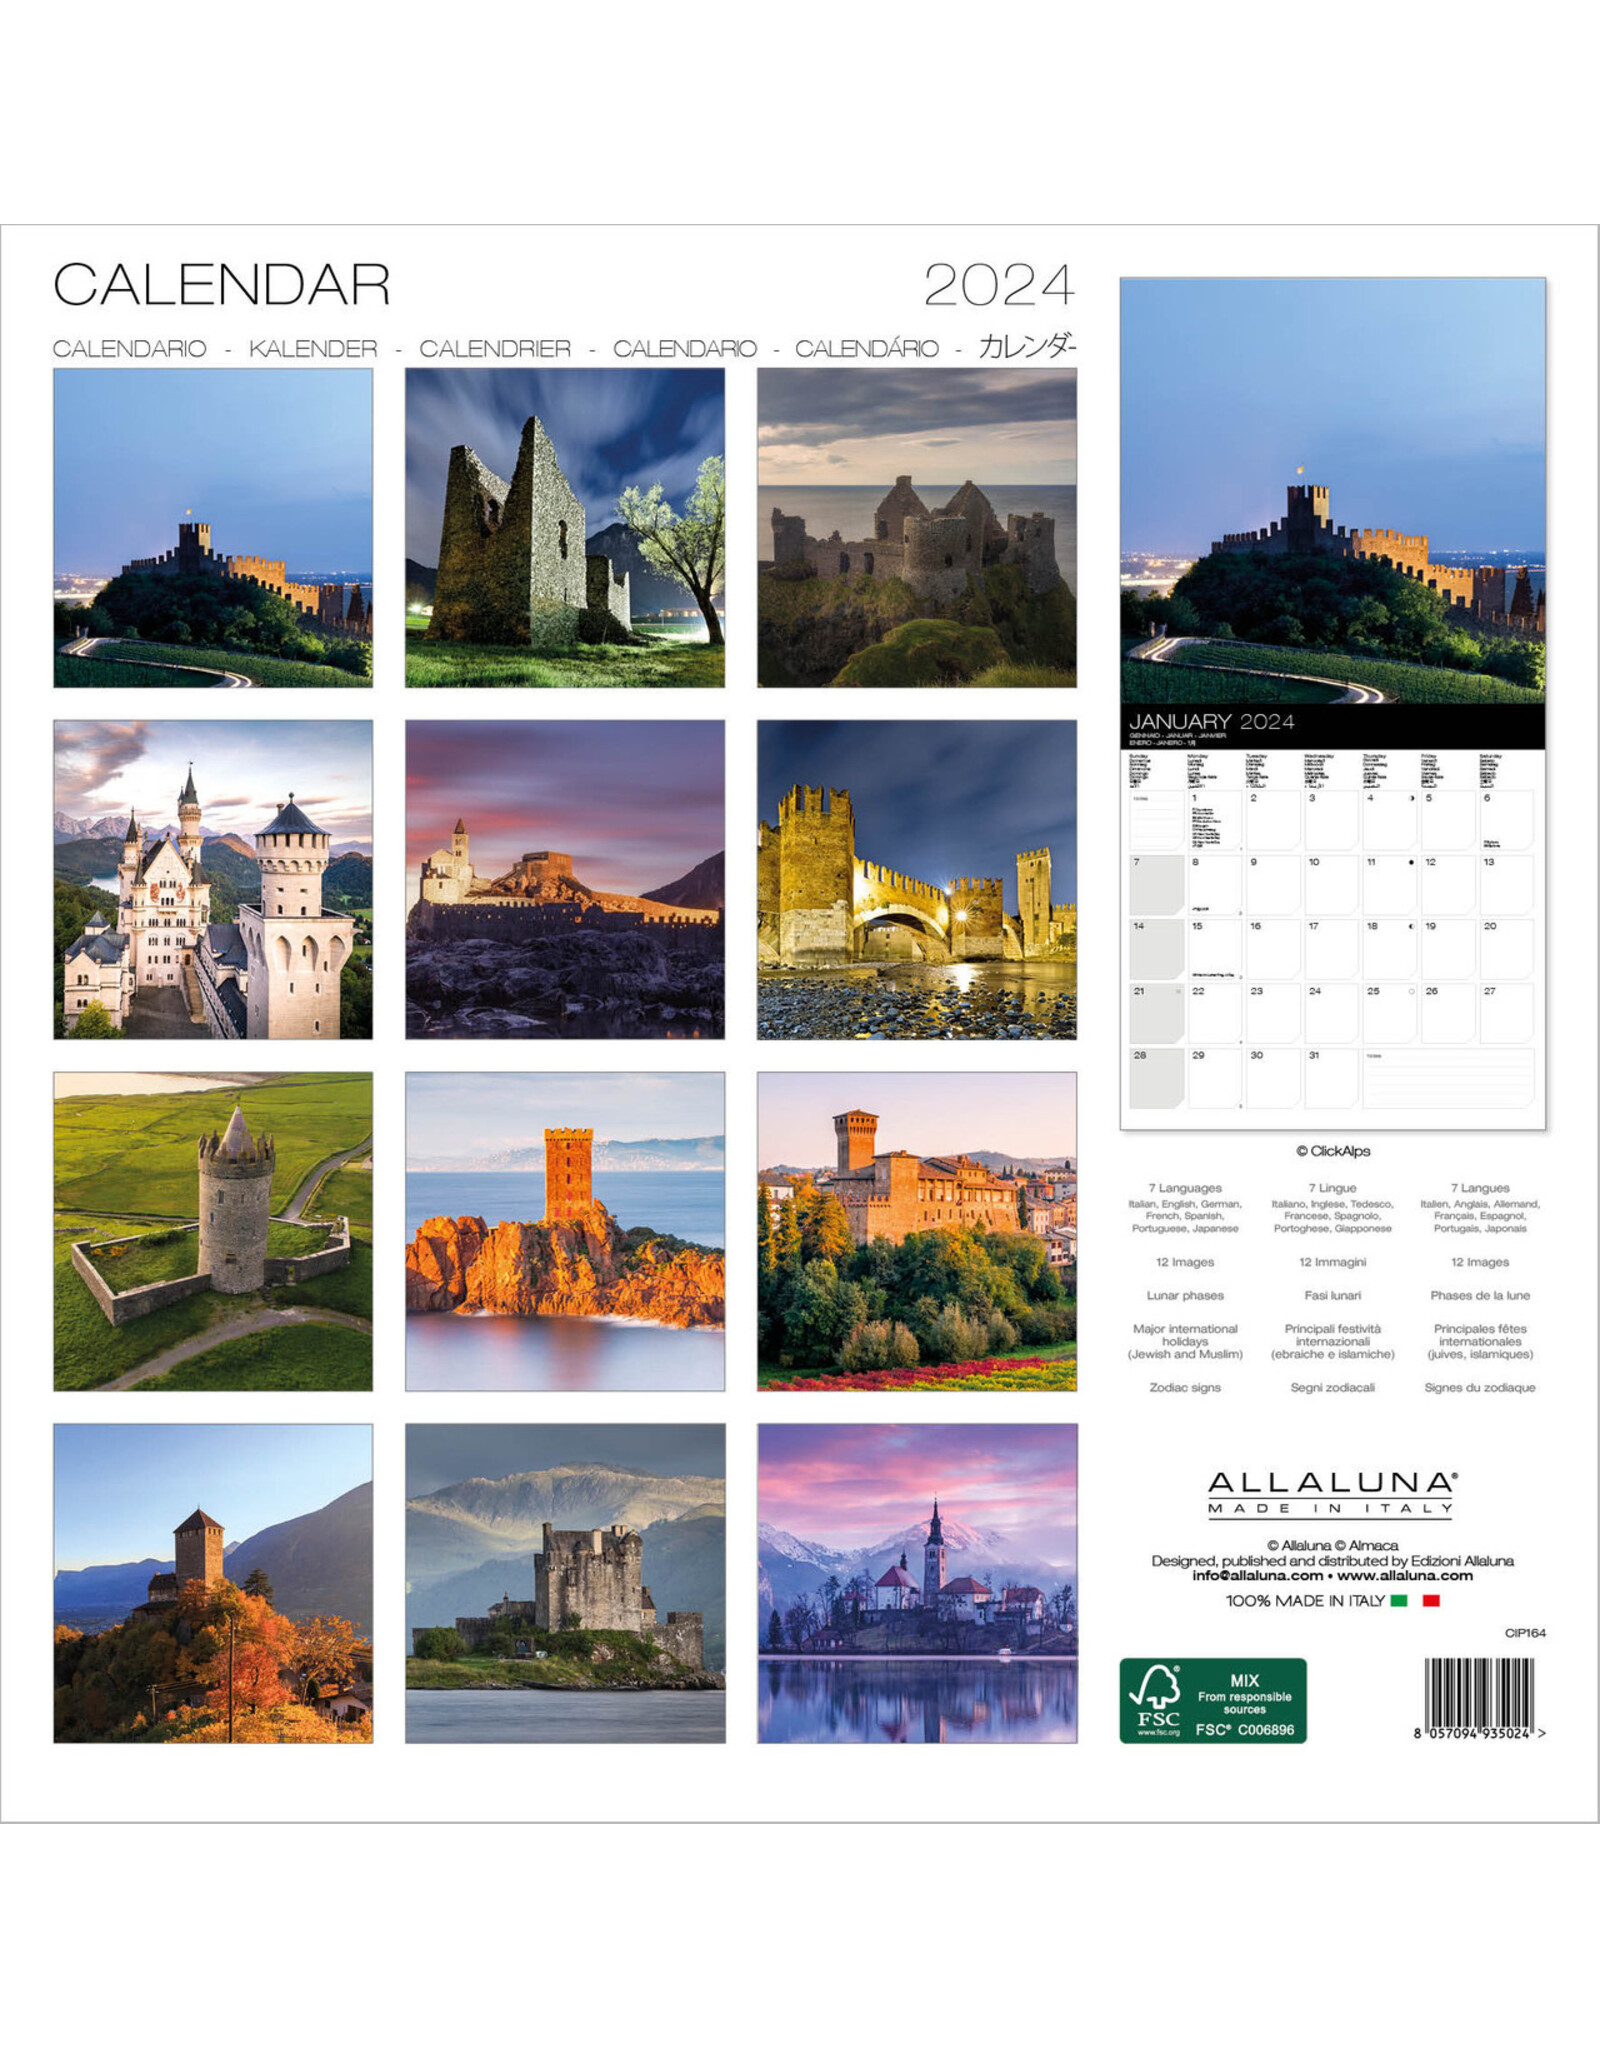 Allaluna Castles 2024 Wall Calendar